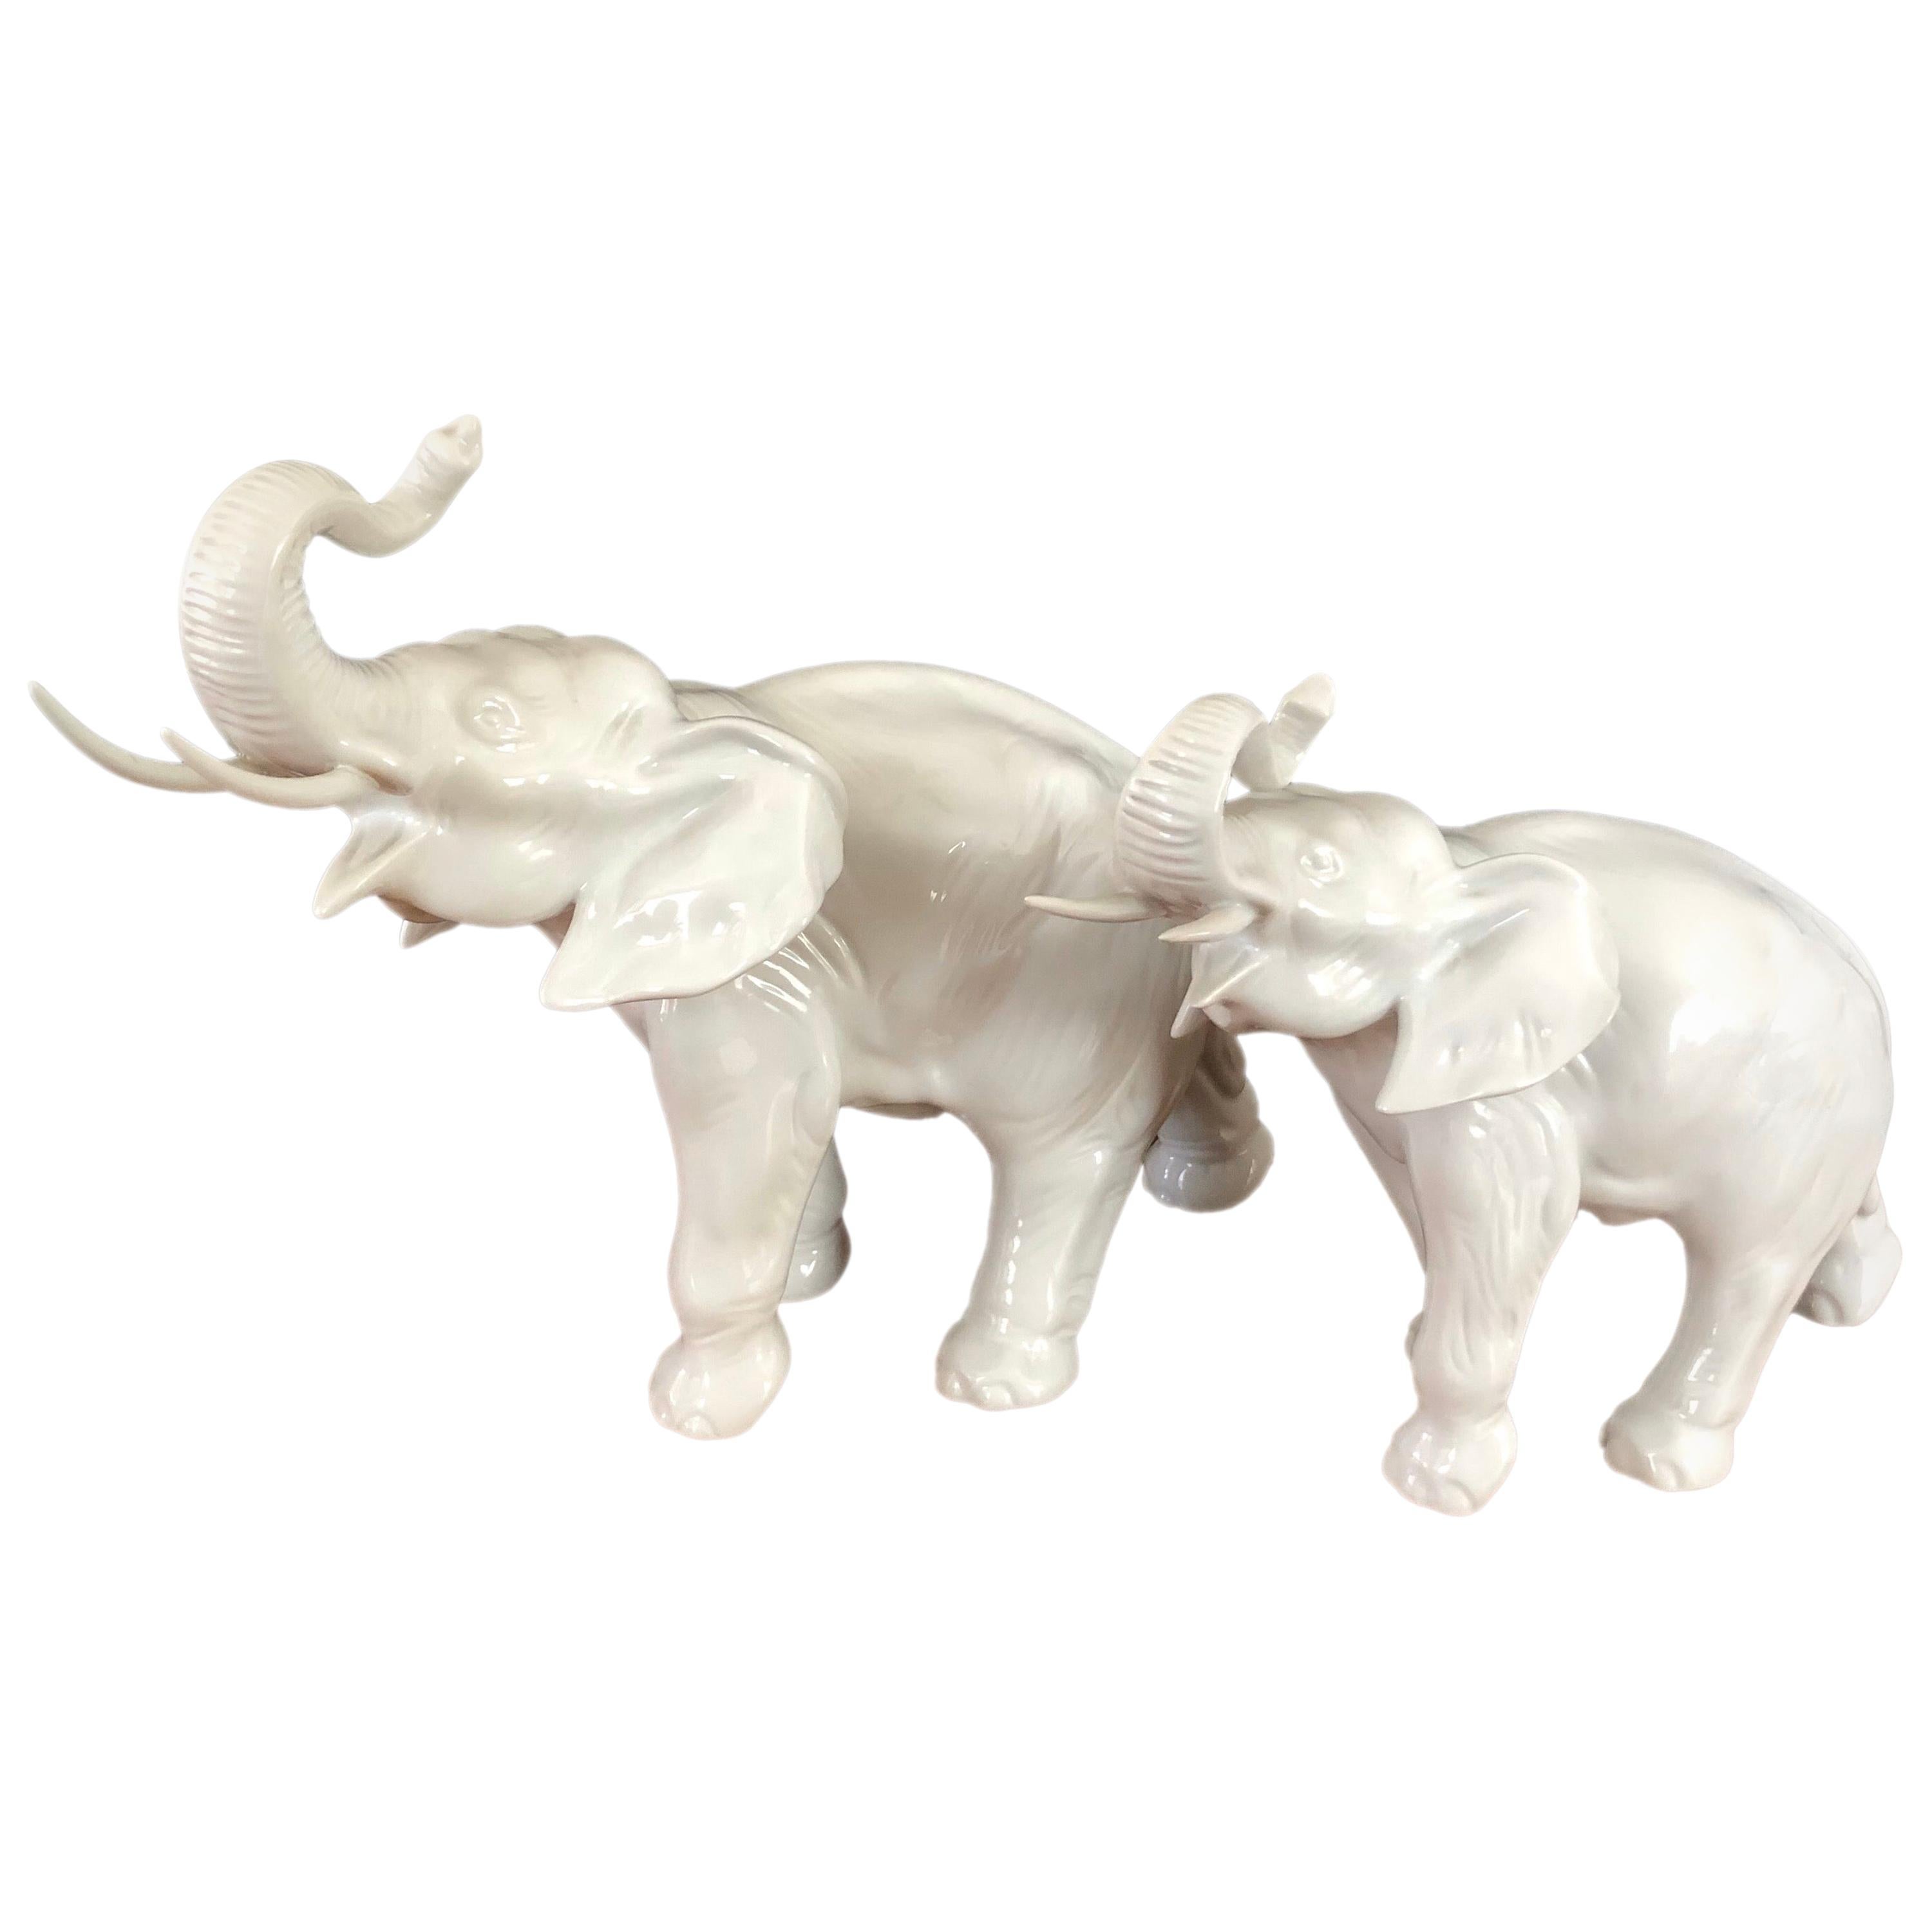 Pair of White Porcelain Elephant Sculptures by Royal Dux